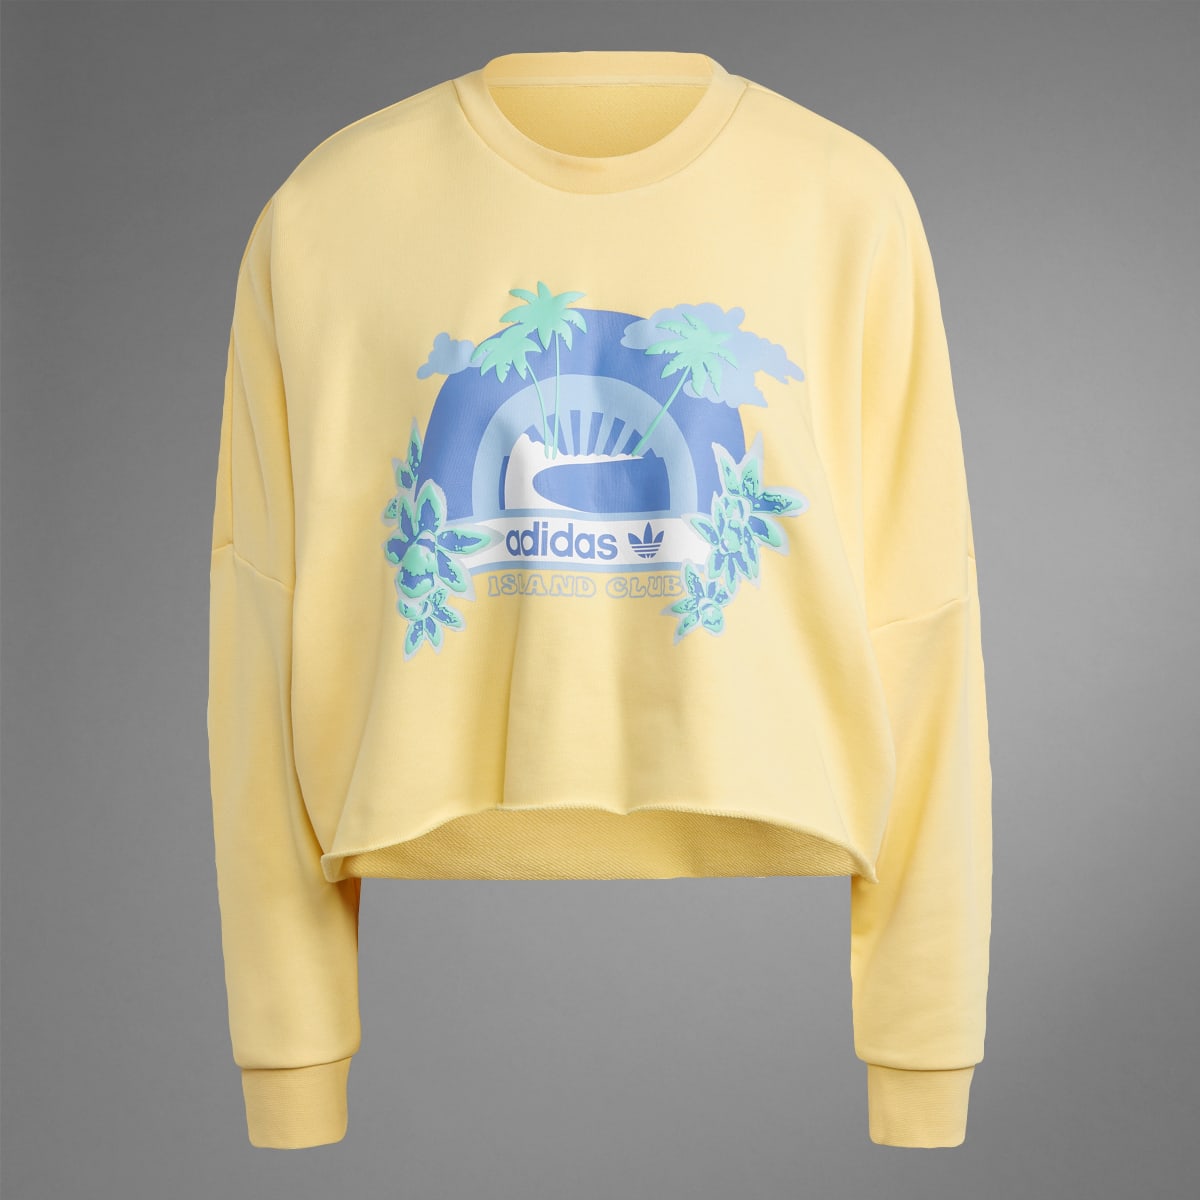 Adidas Island Club Crew Graphic Sweatshirt. 10